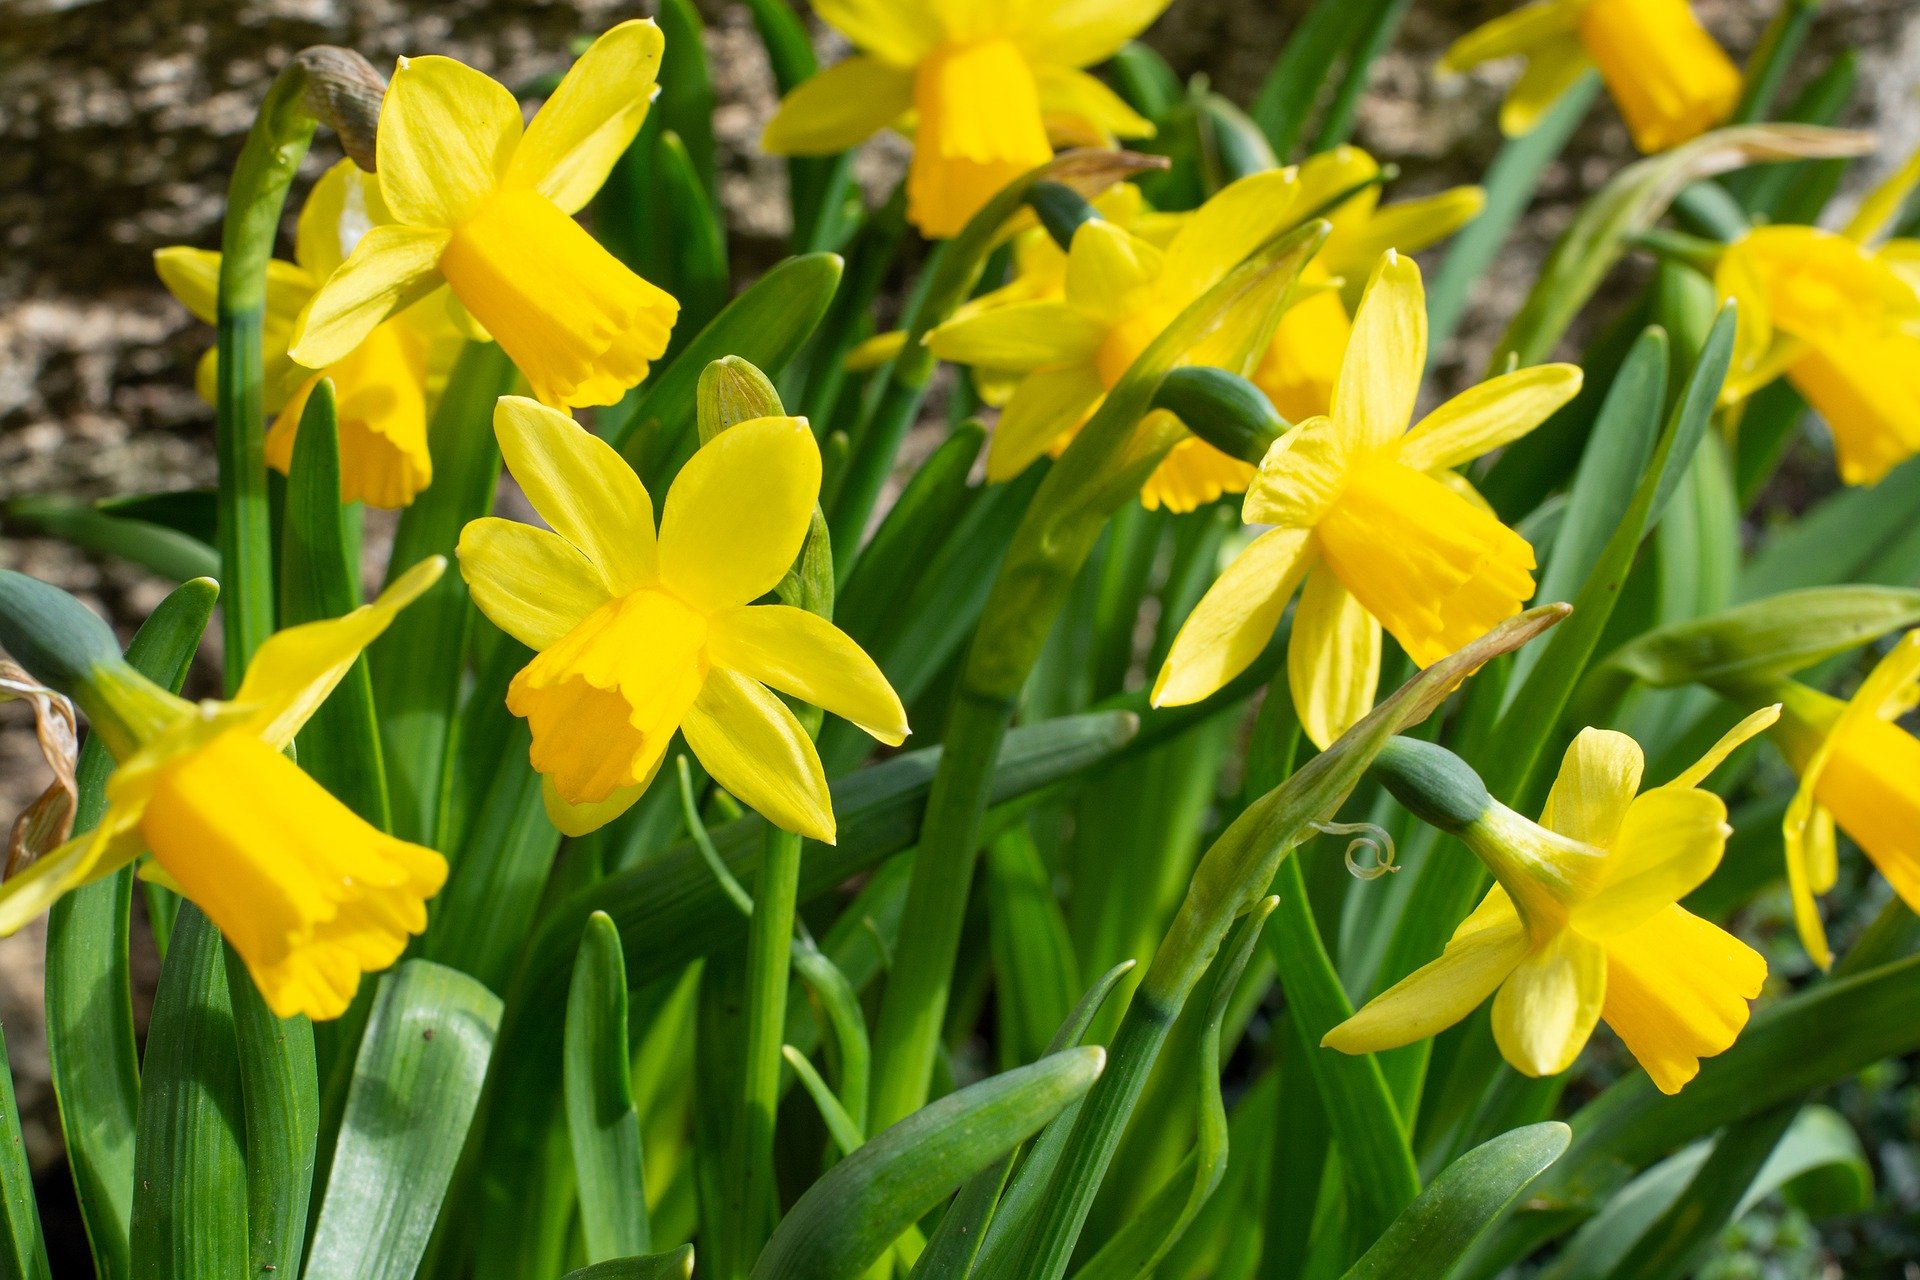 daffodils-4110041_1920 (c) pixabay.com